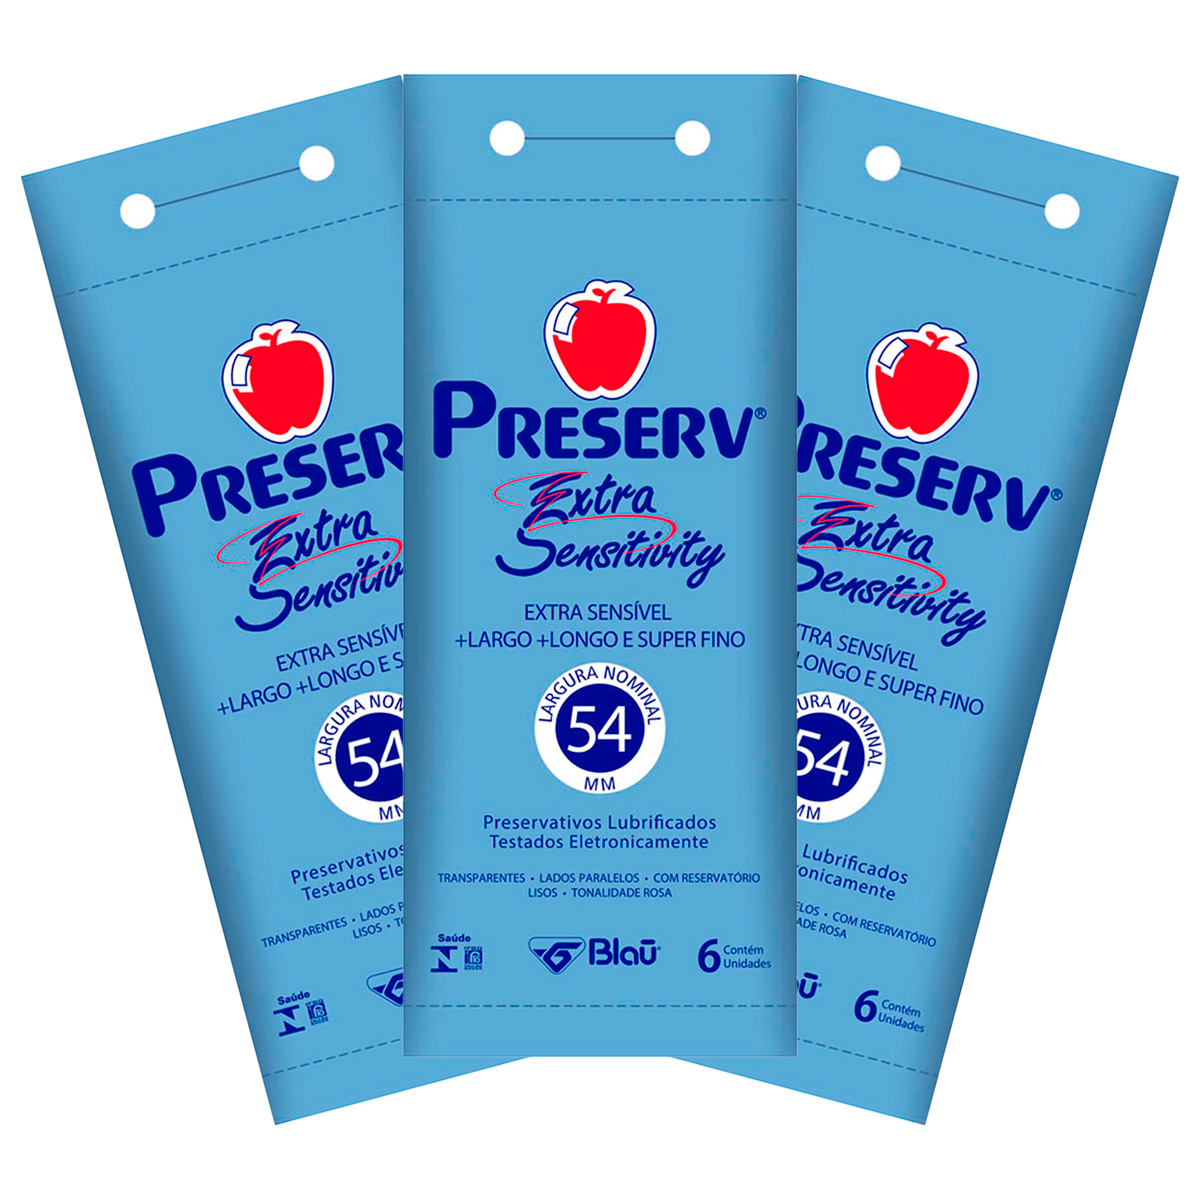 Preservativo Preserv Extra Sensitivity 6un - Kit com 3